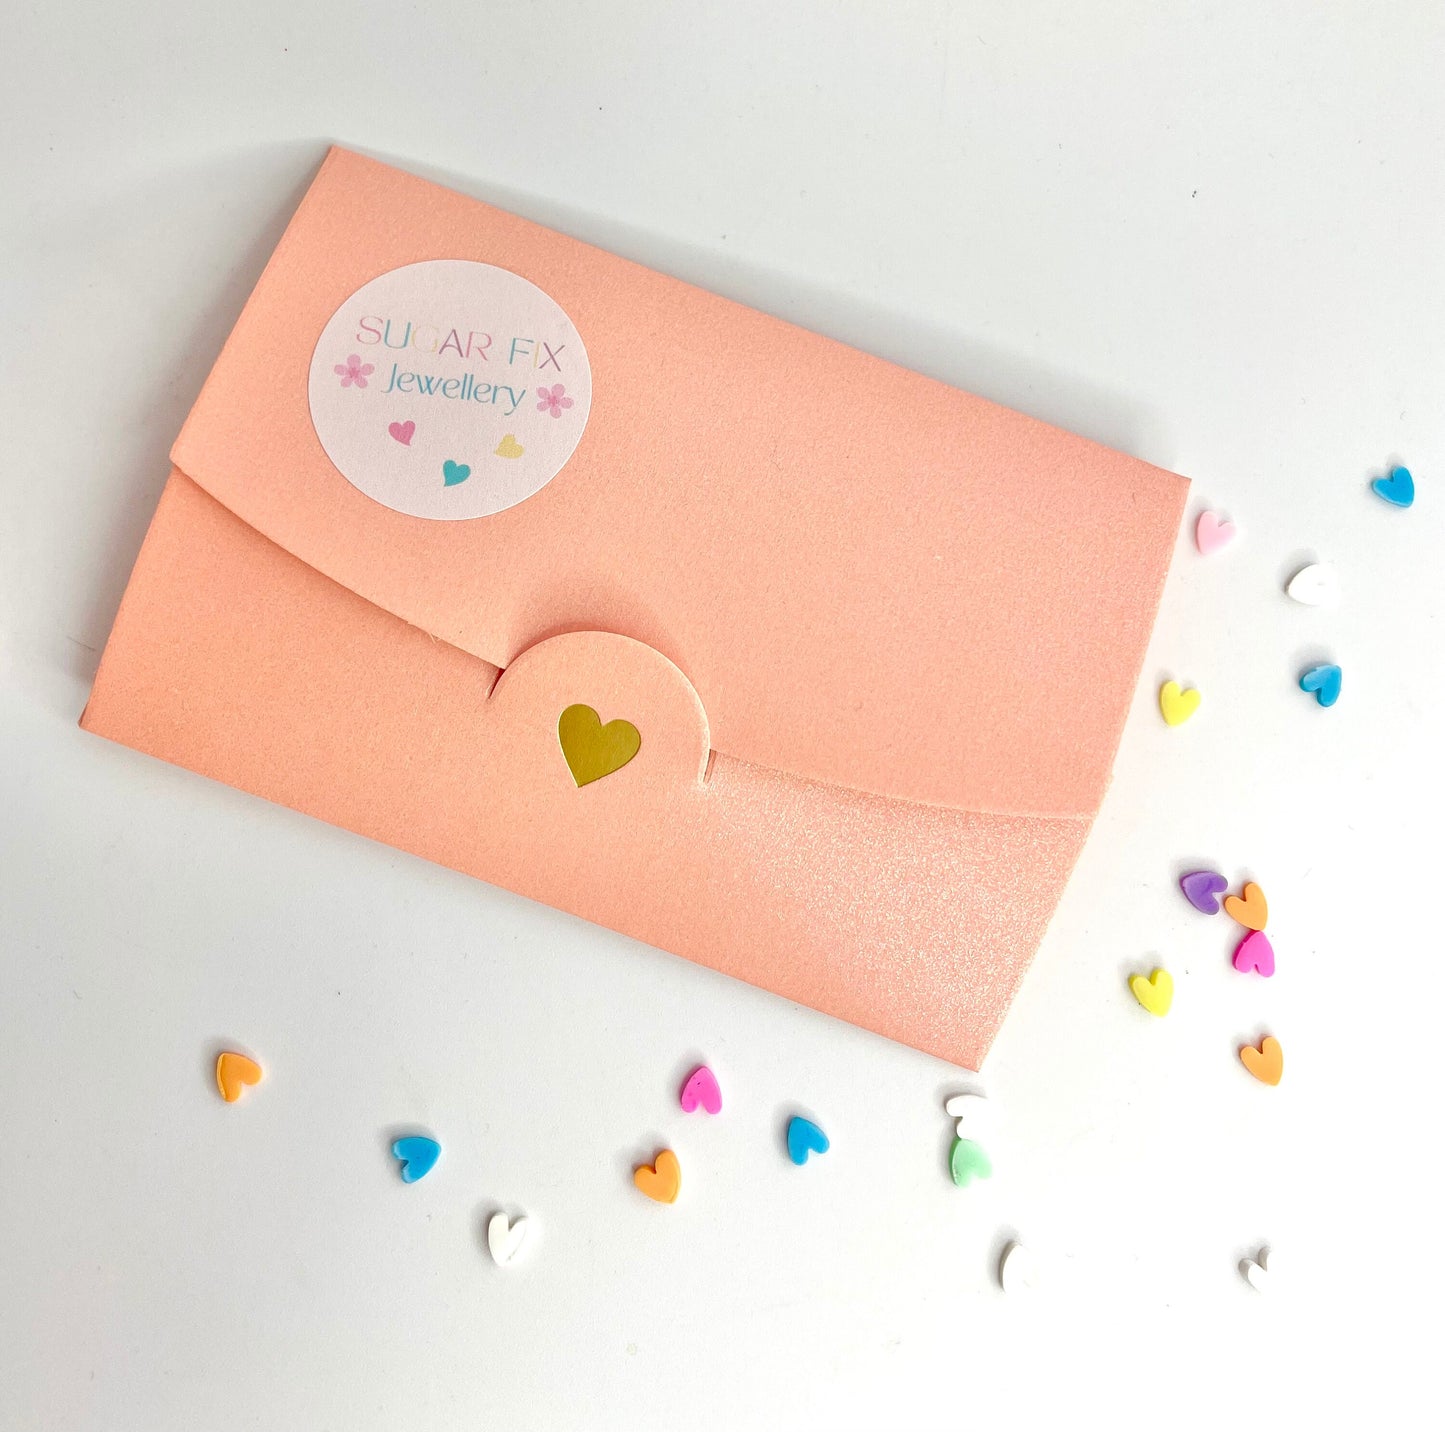 Easter Bunny Hug Pocket Gift - Unique Fabric Glitter - Alternative Alternate Easter Gift - Hug in a Letter Box Gift Card Envelope included